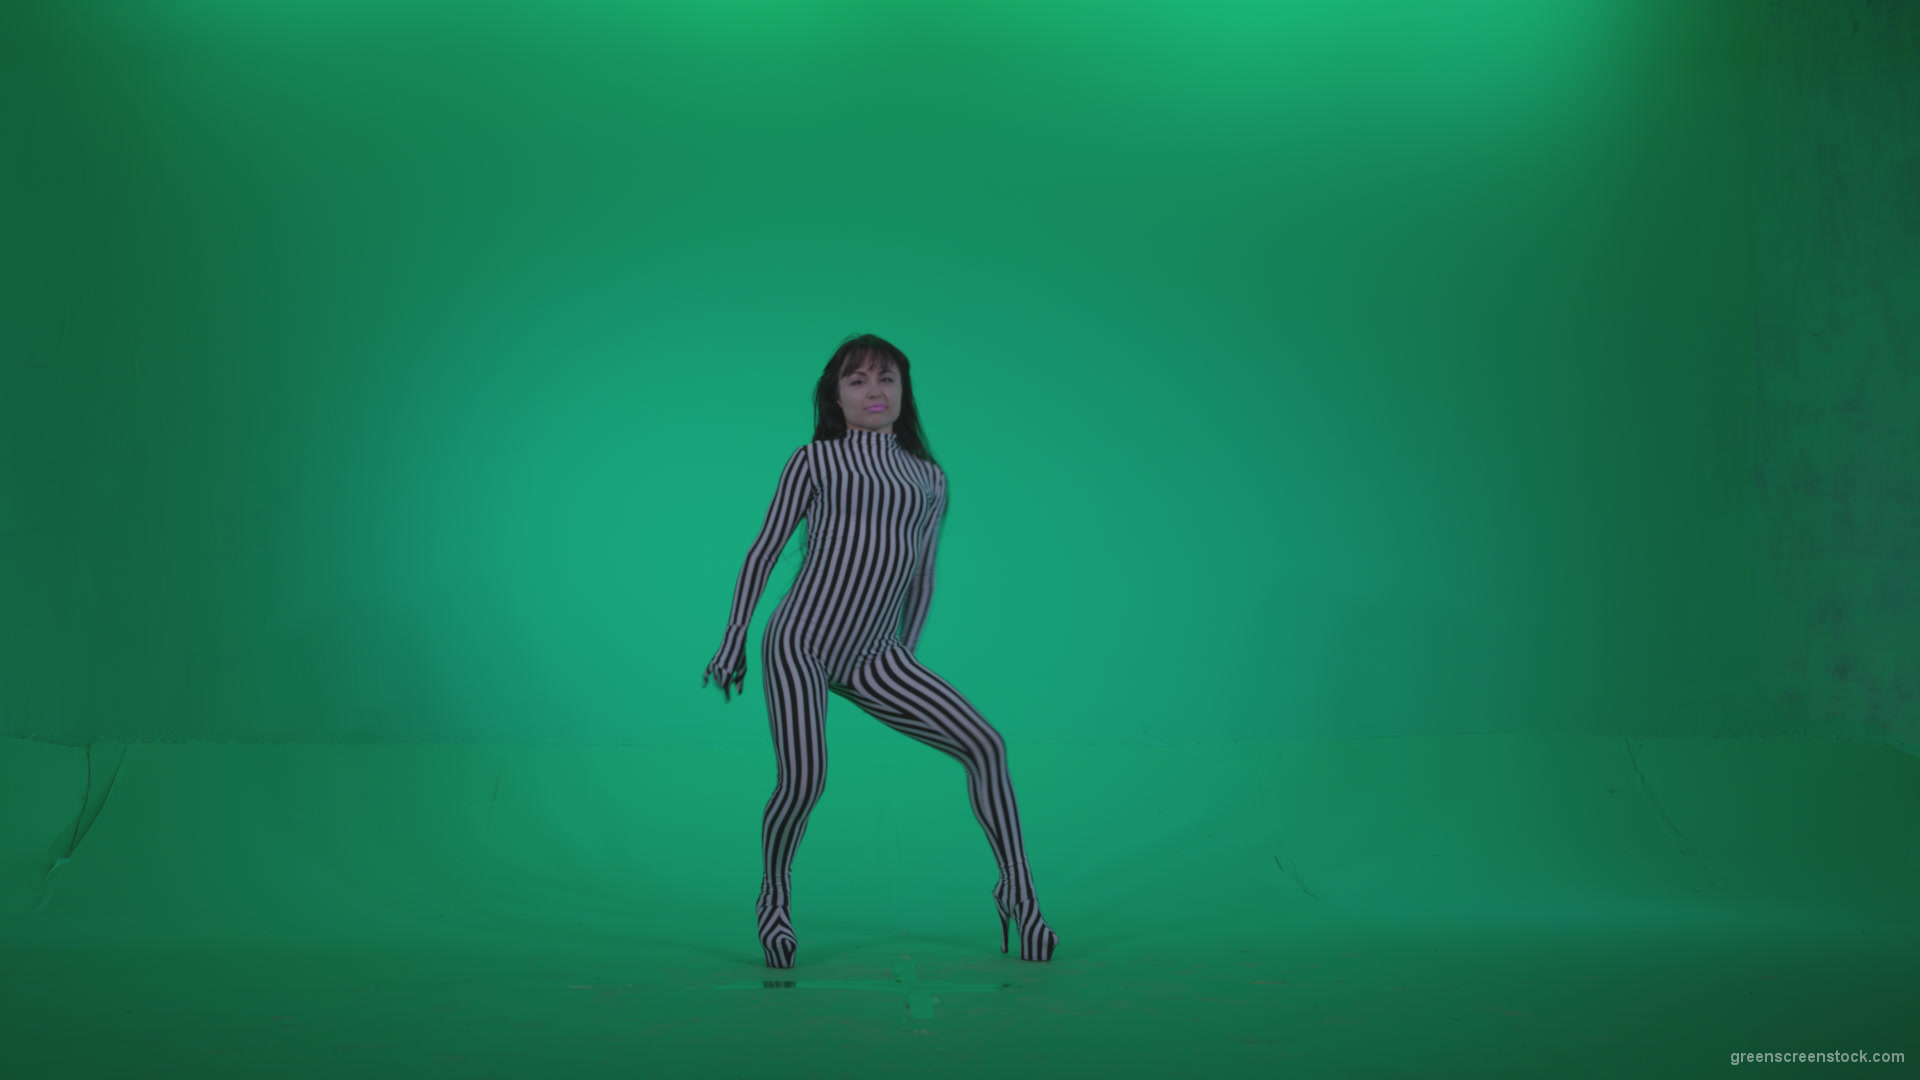 Go-go-Dancer-White-Stripes-s4-Green-Screen-Video-Footage_002 Green Screen Stock